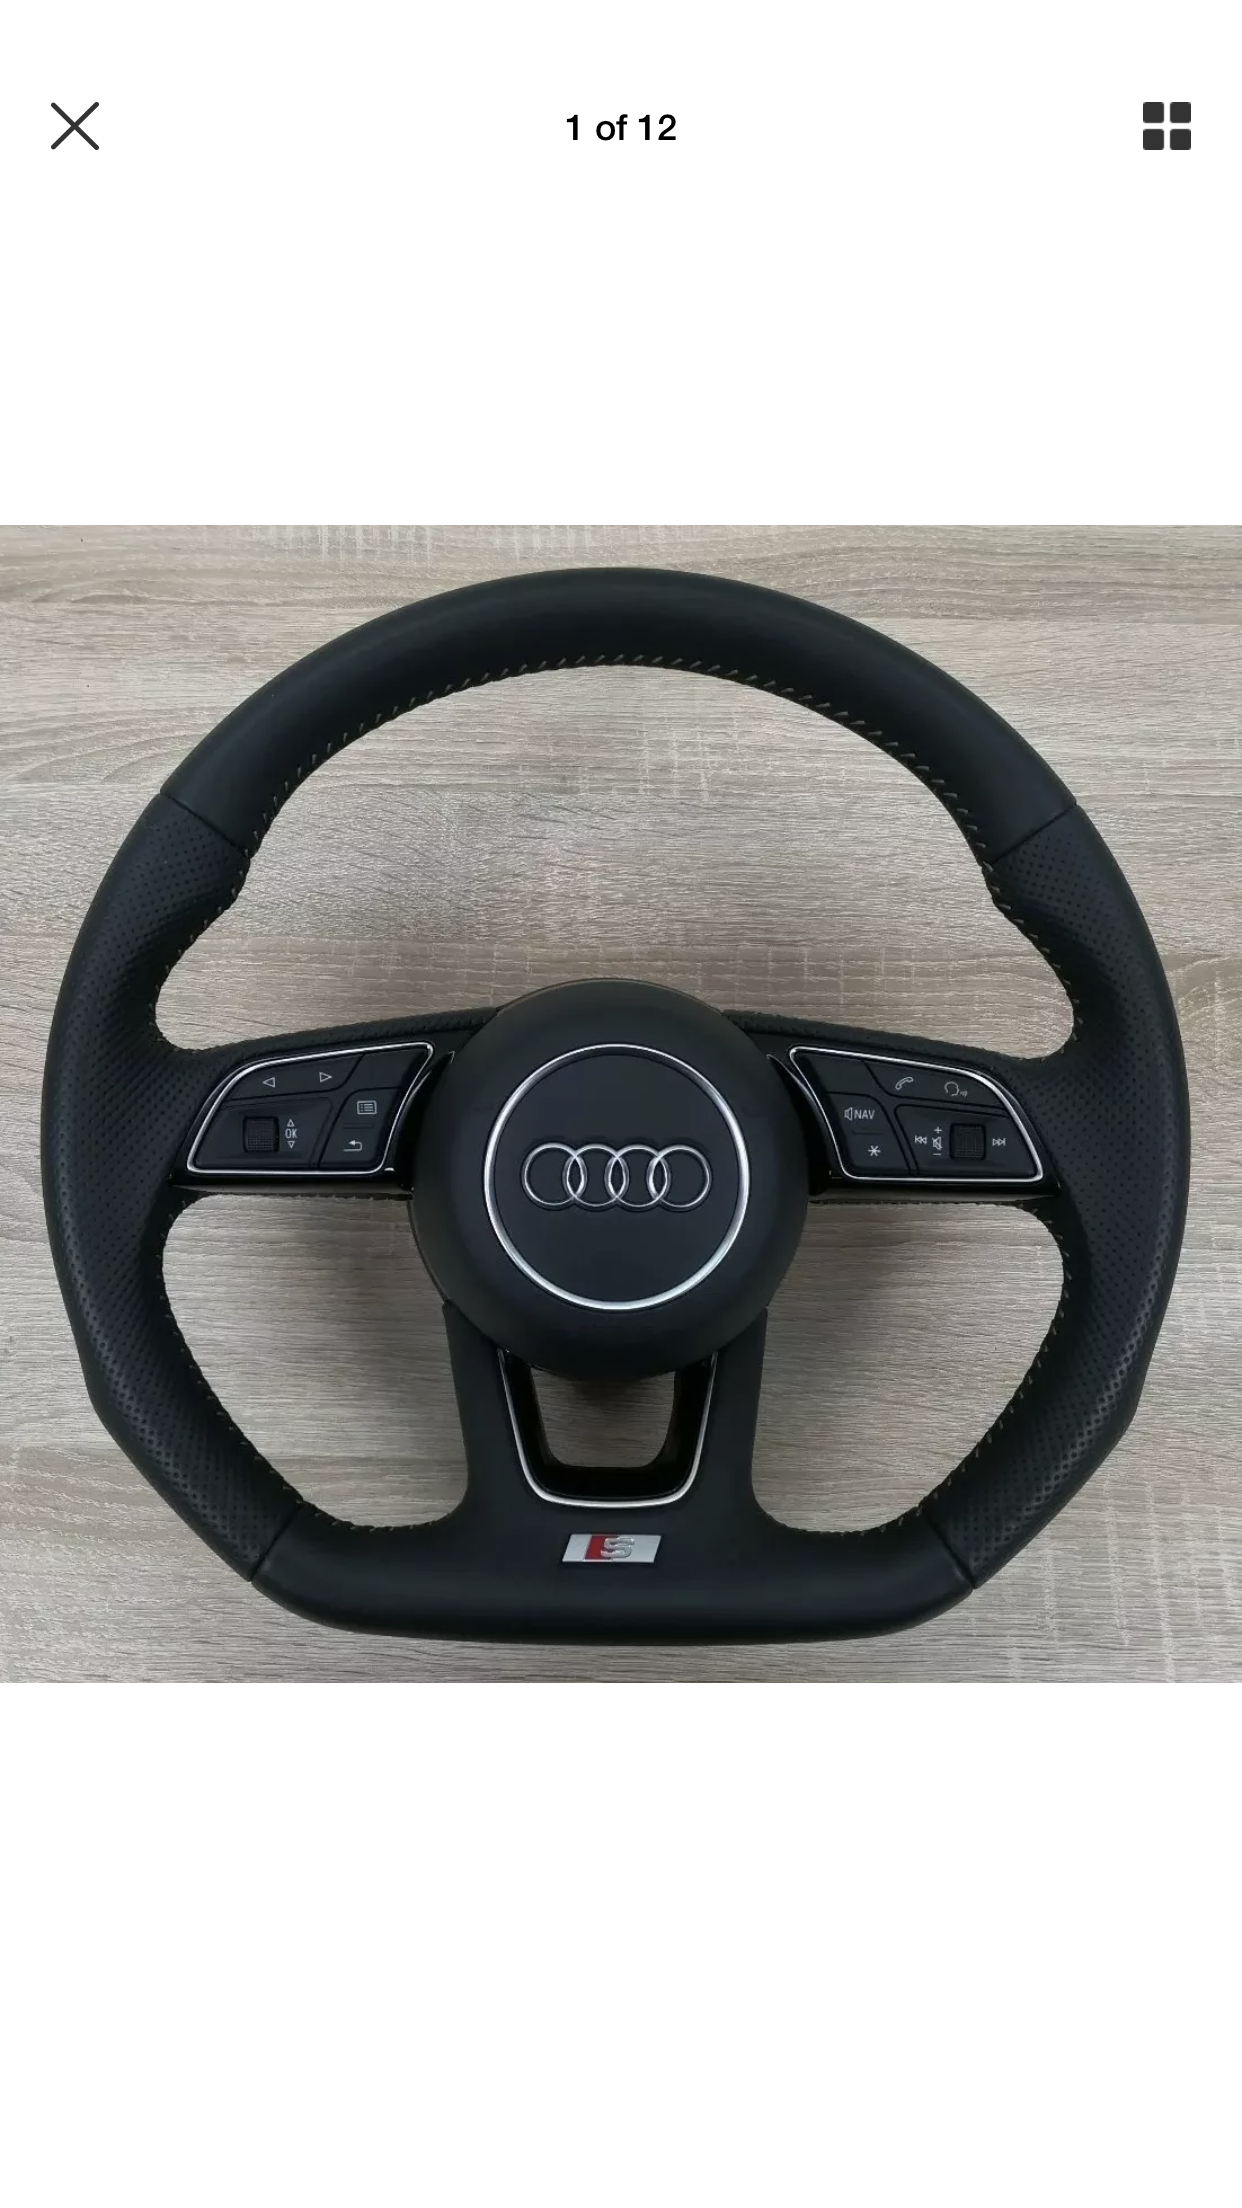 Potential new steering wheel